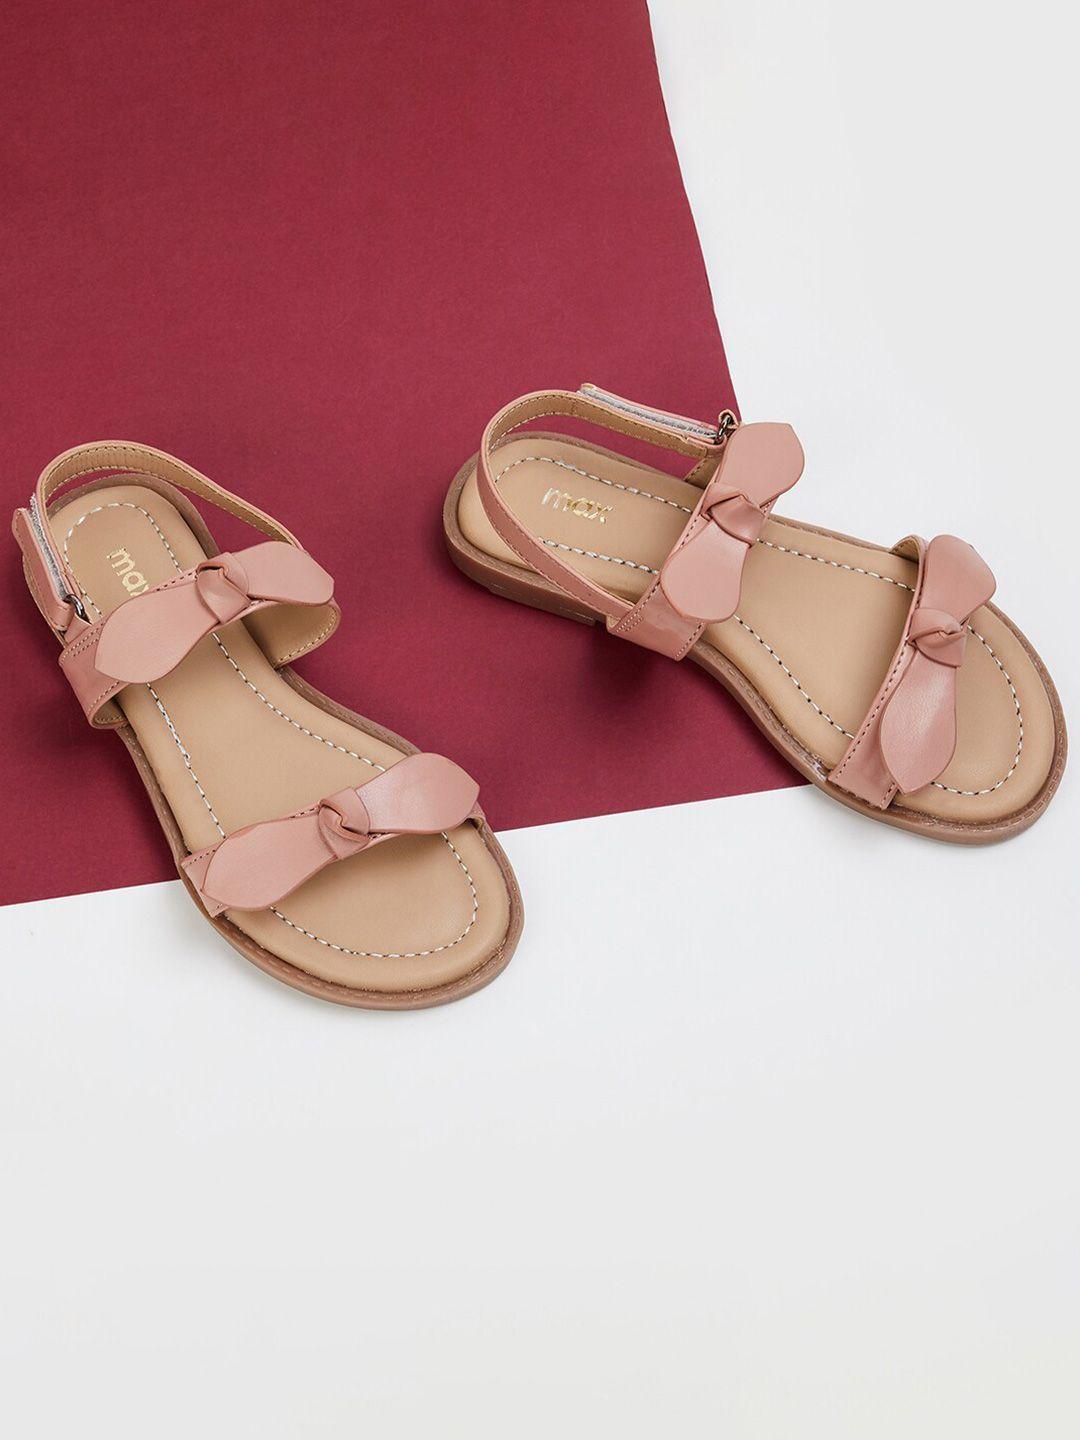 max Girls Pink PU Comfort Sandals